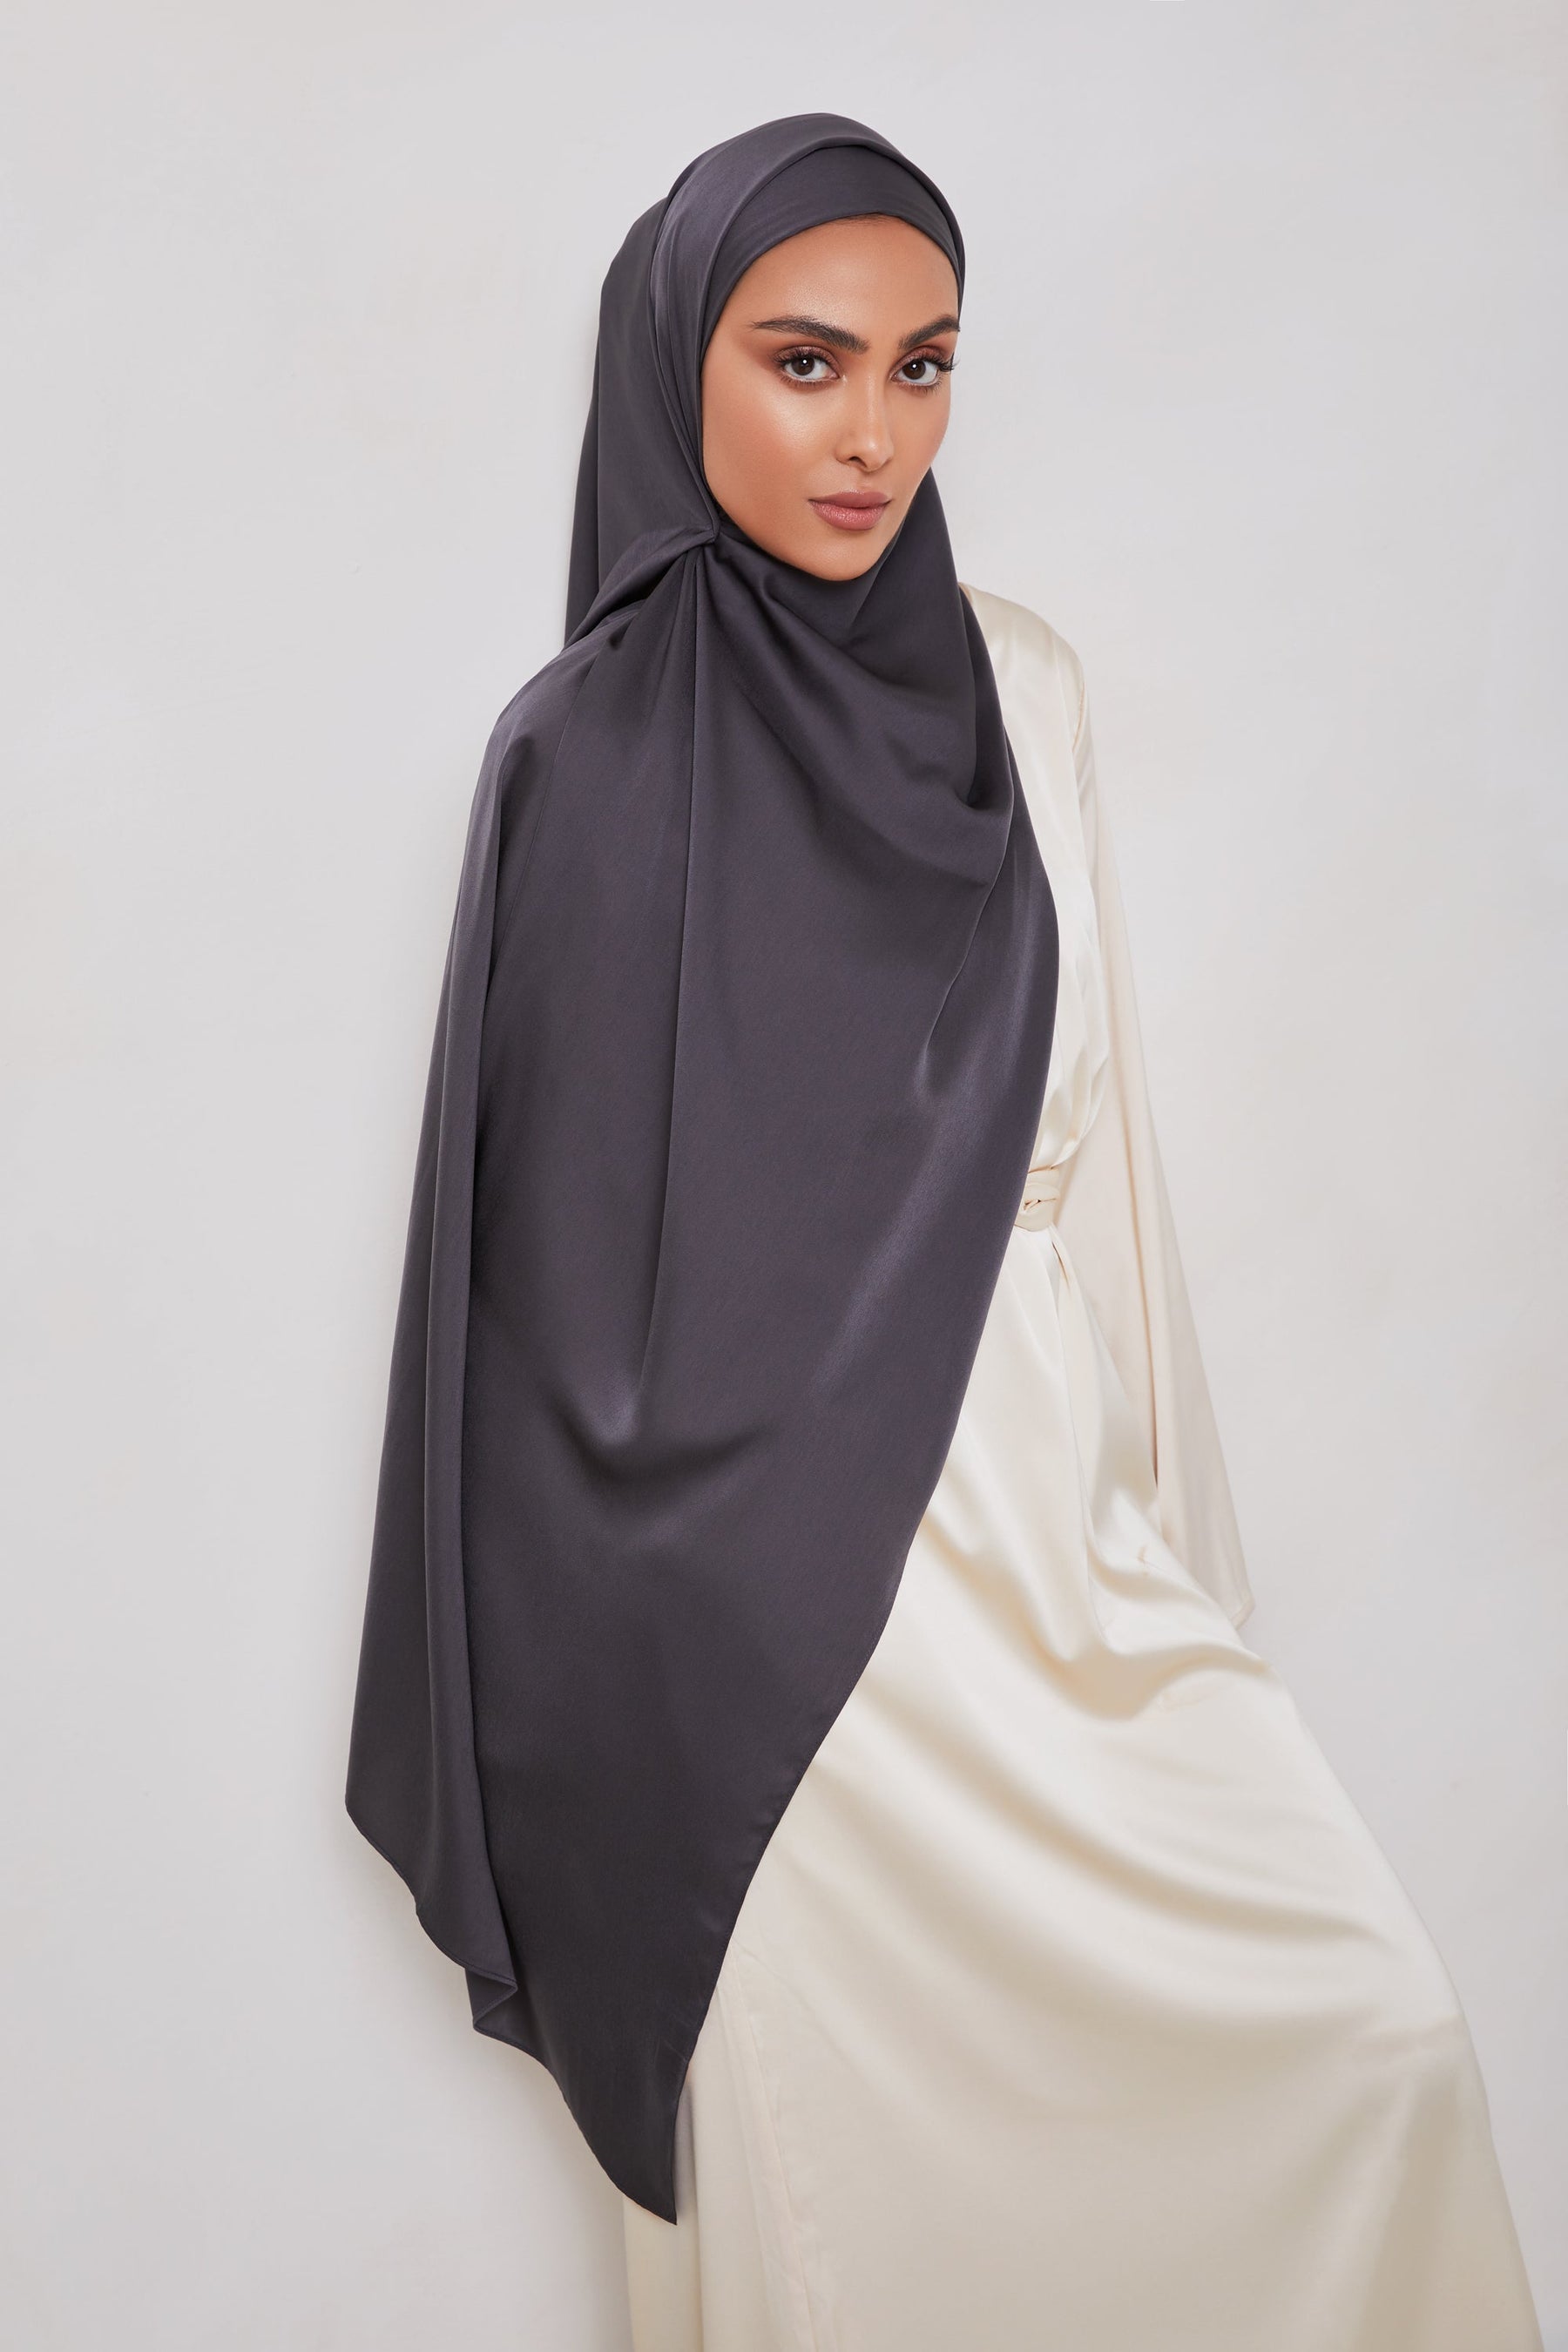 MATTE Satin Hijab - Ink Veiled Collection 